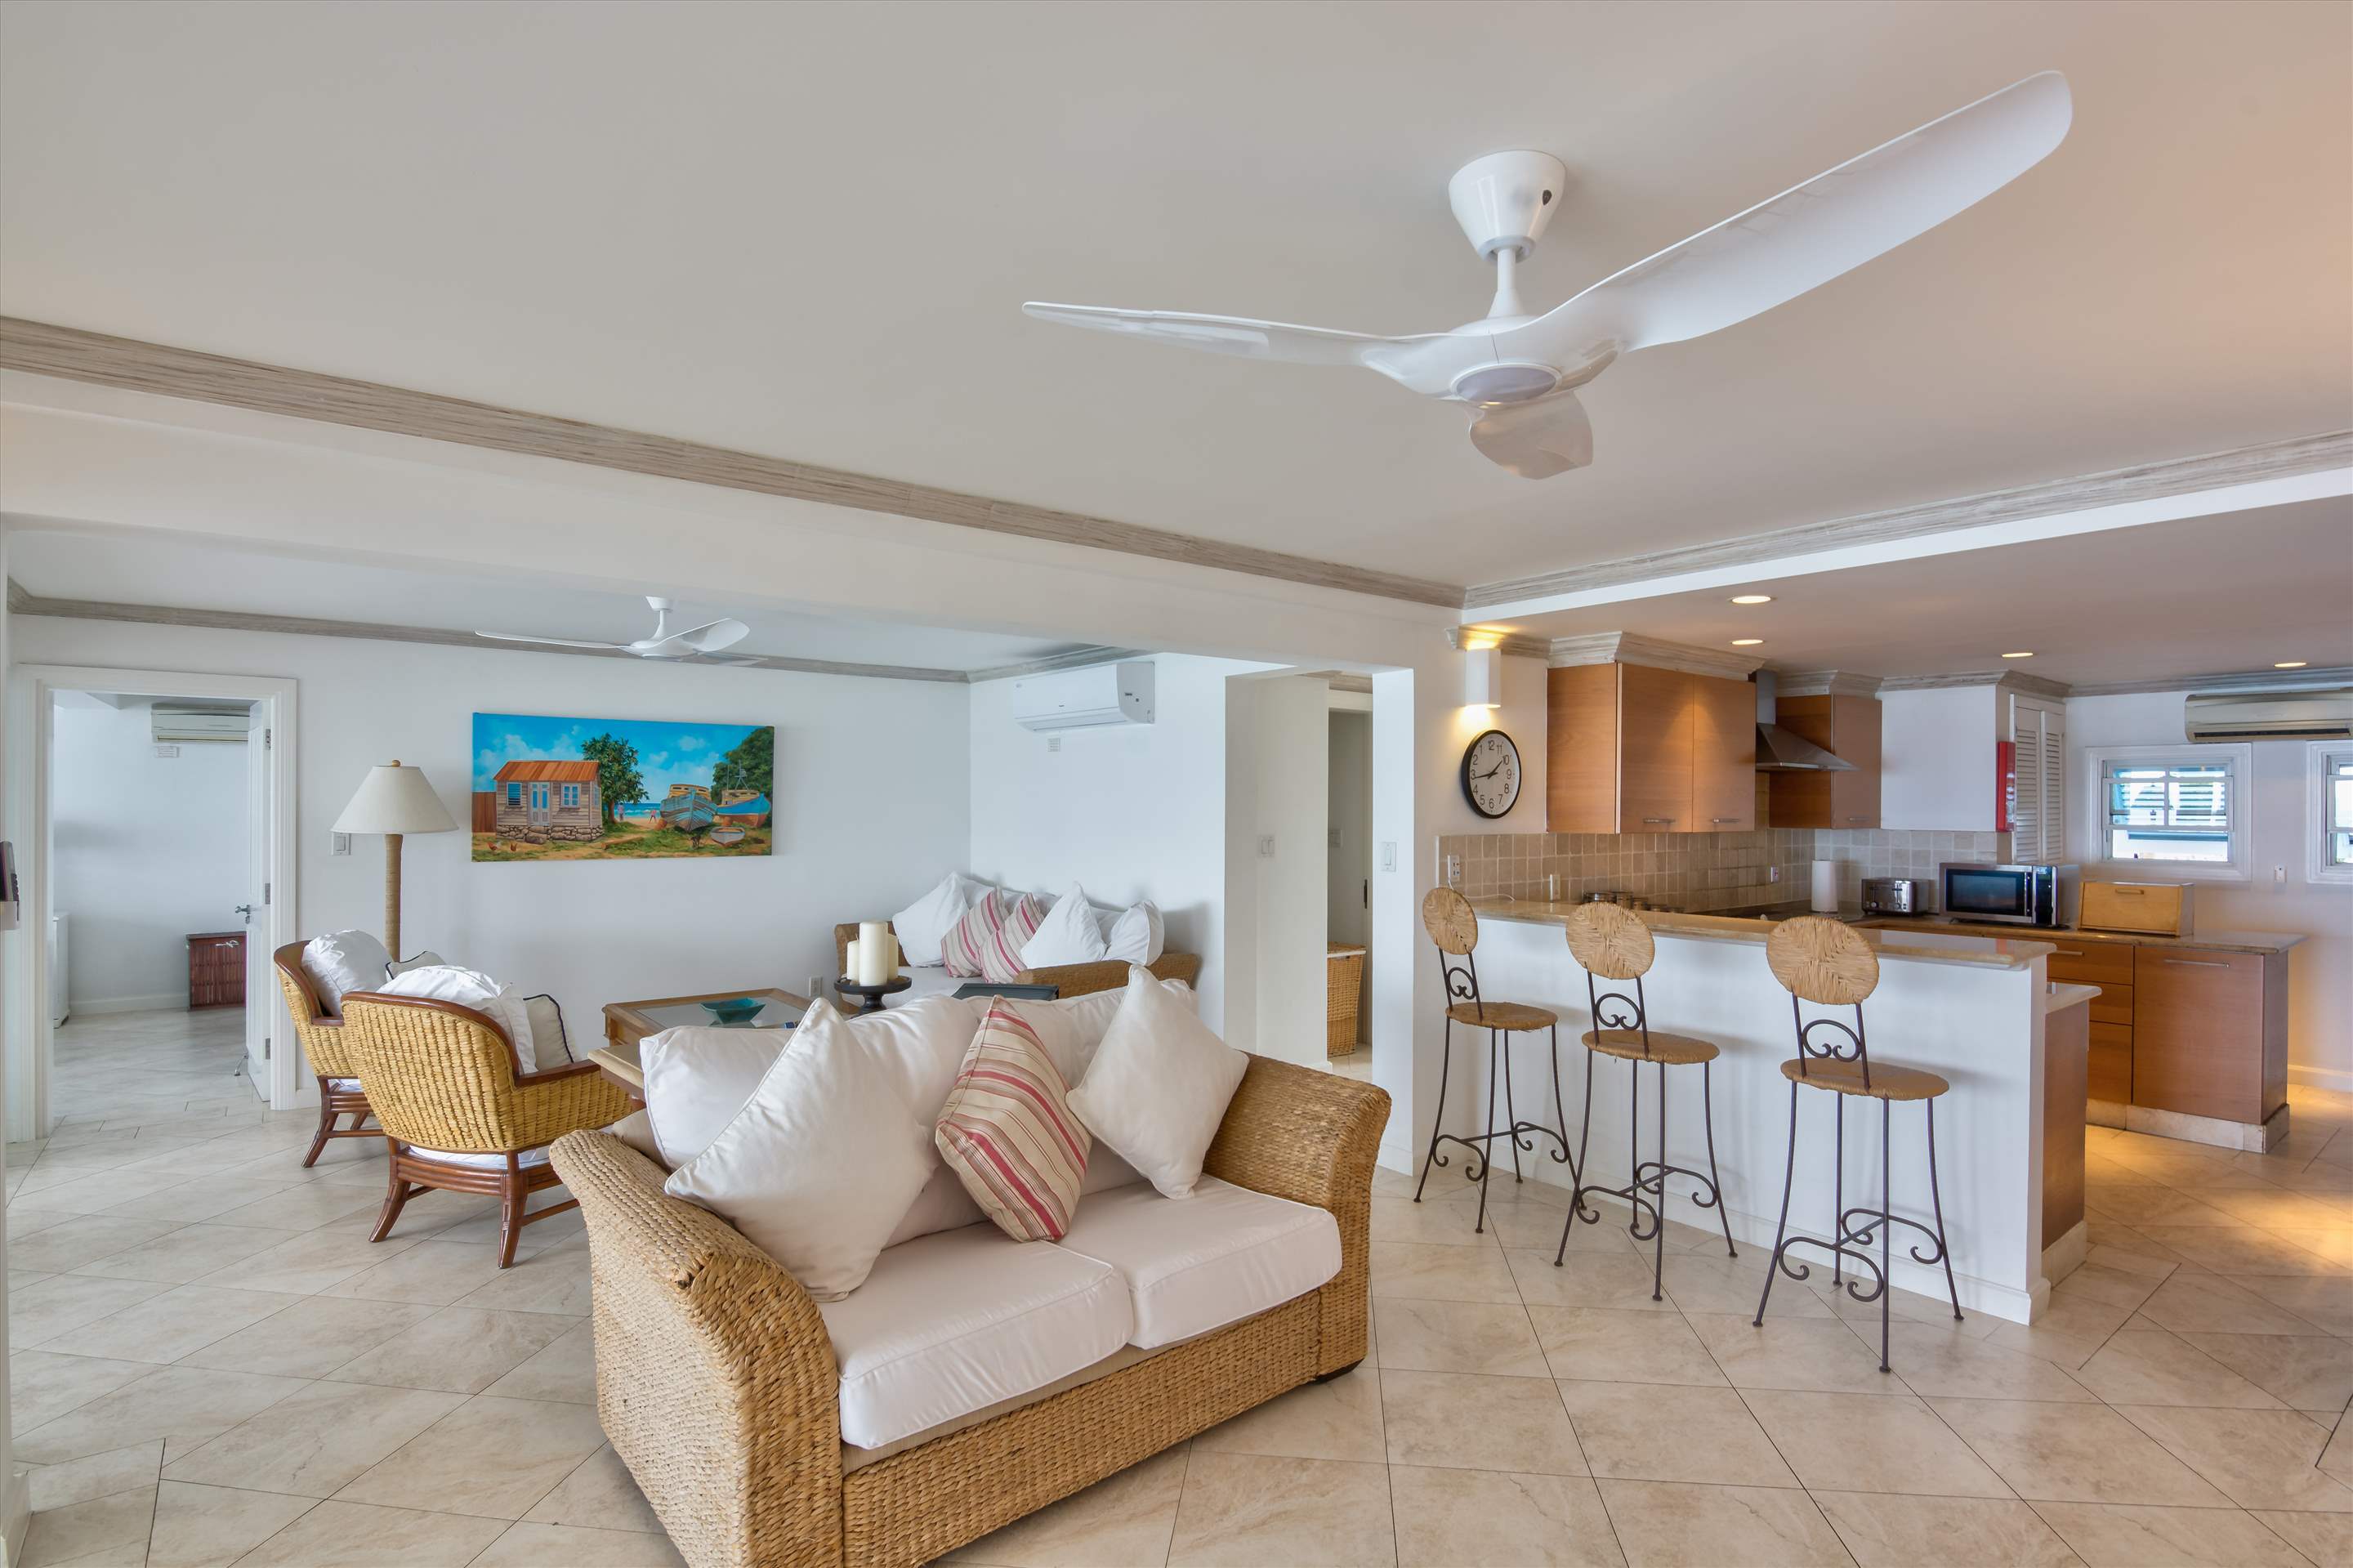 Villas on the Beach 201 , 3 bedroom, 3 bedroom apartment in St. James & West Coast, Barbados Photo #7